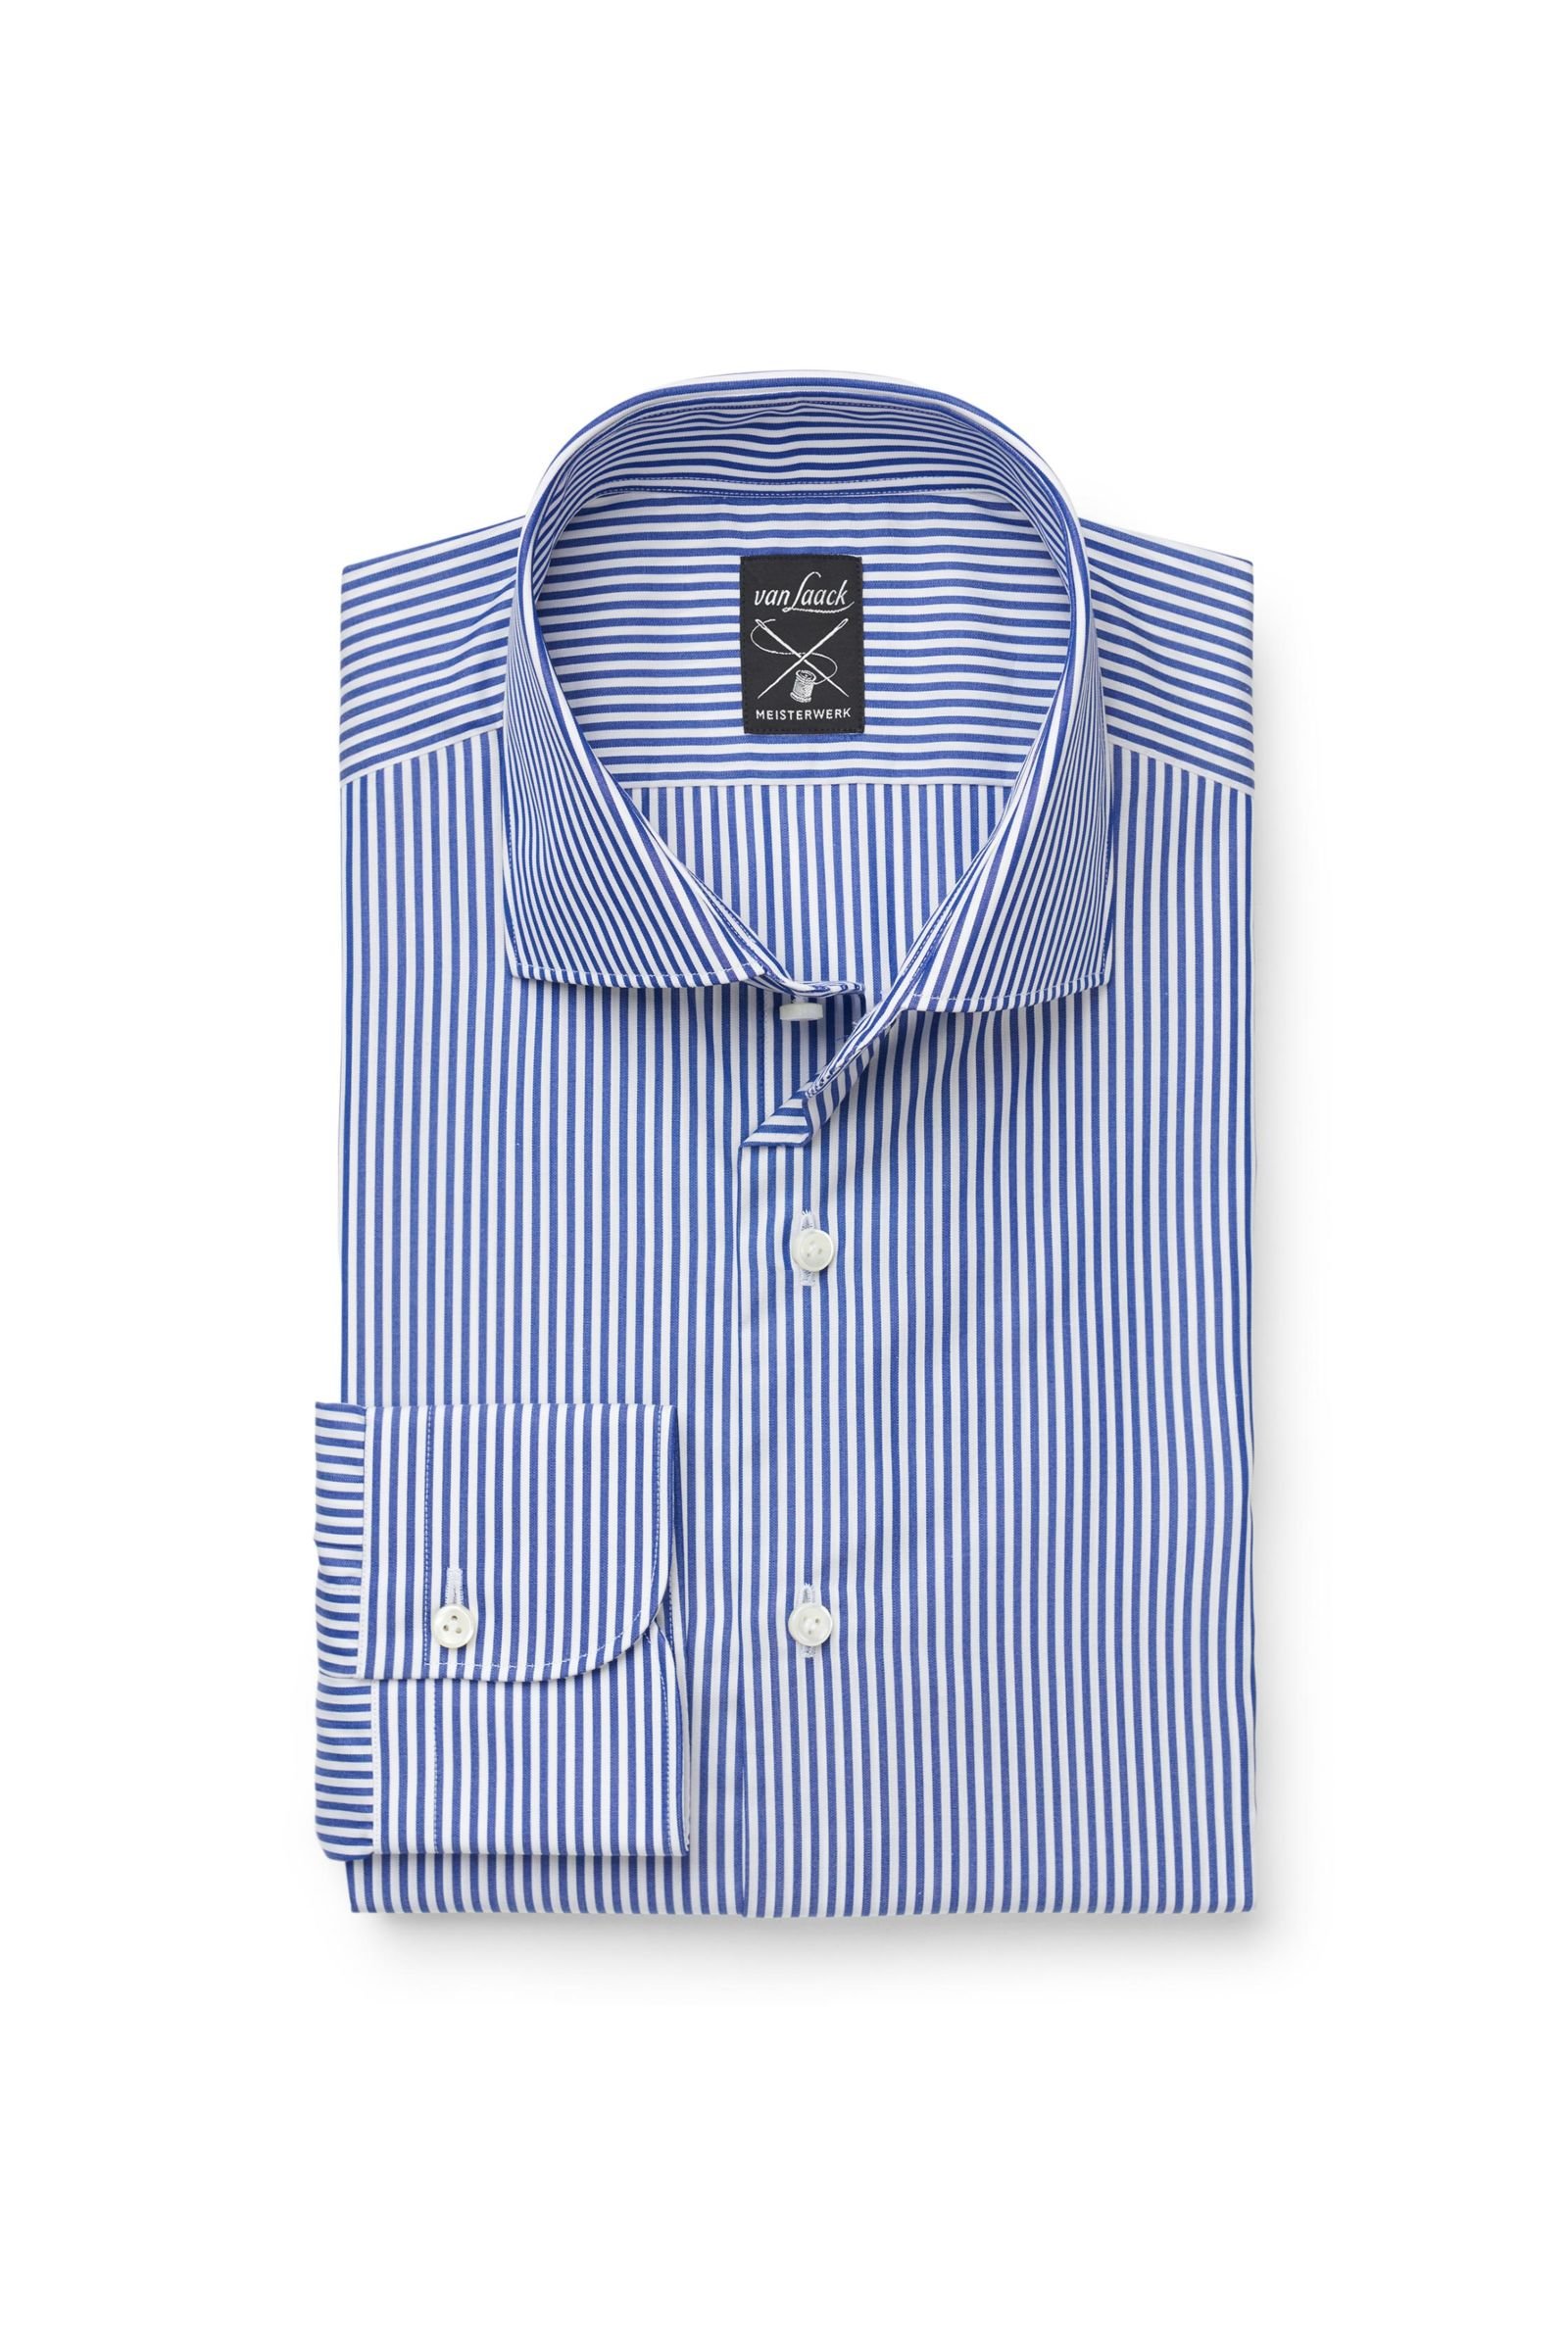 Business shirt 'Mivara Tailor Fit' shark collar dark blue/white striped